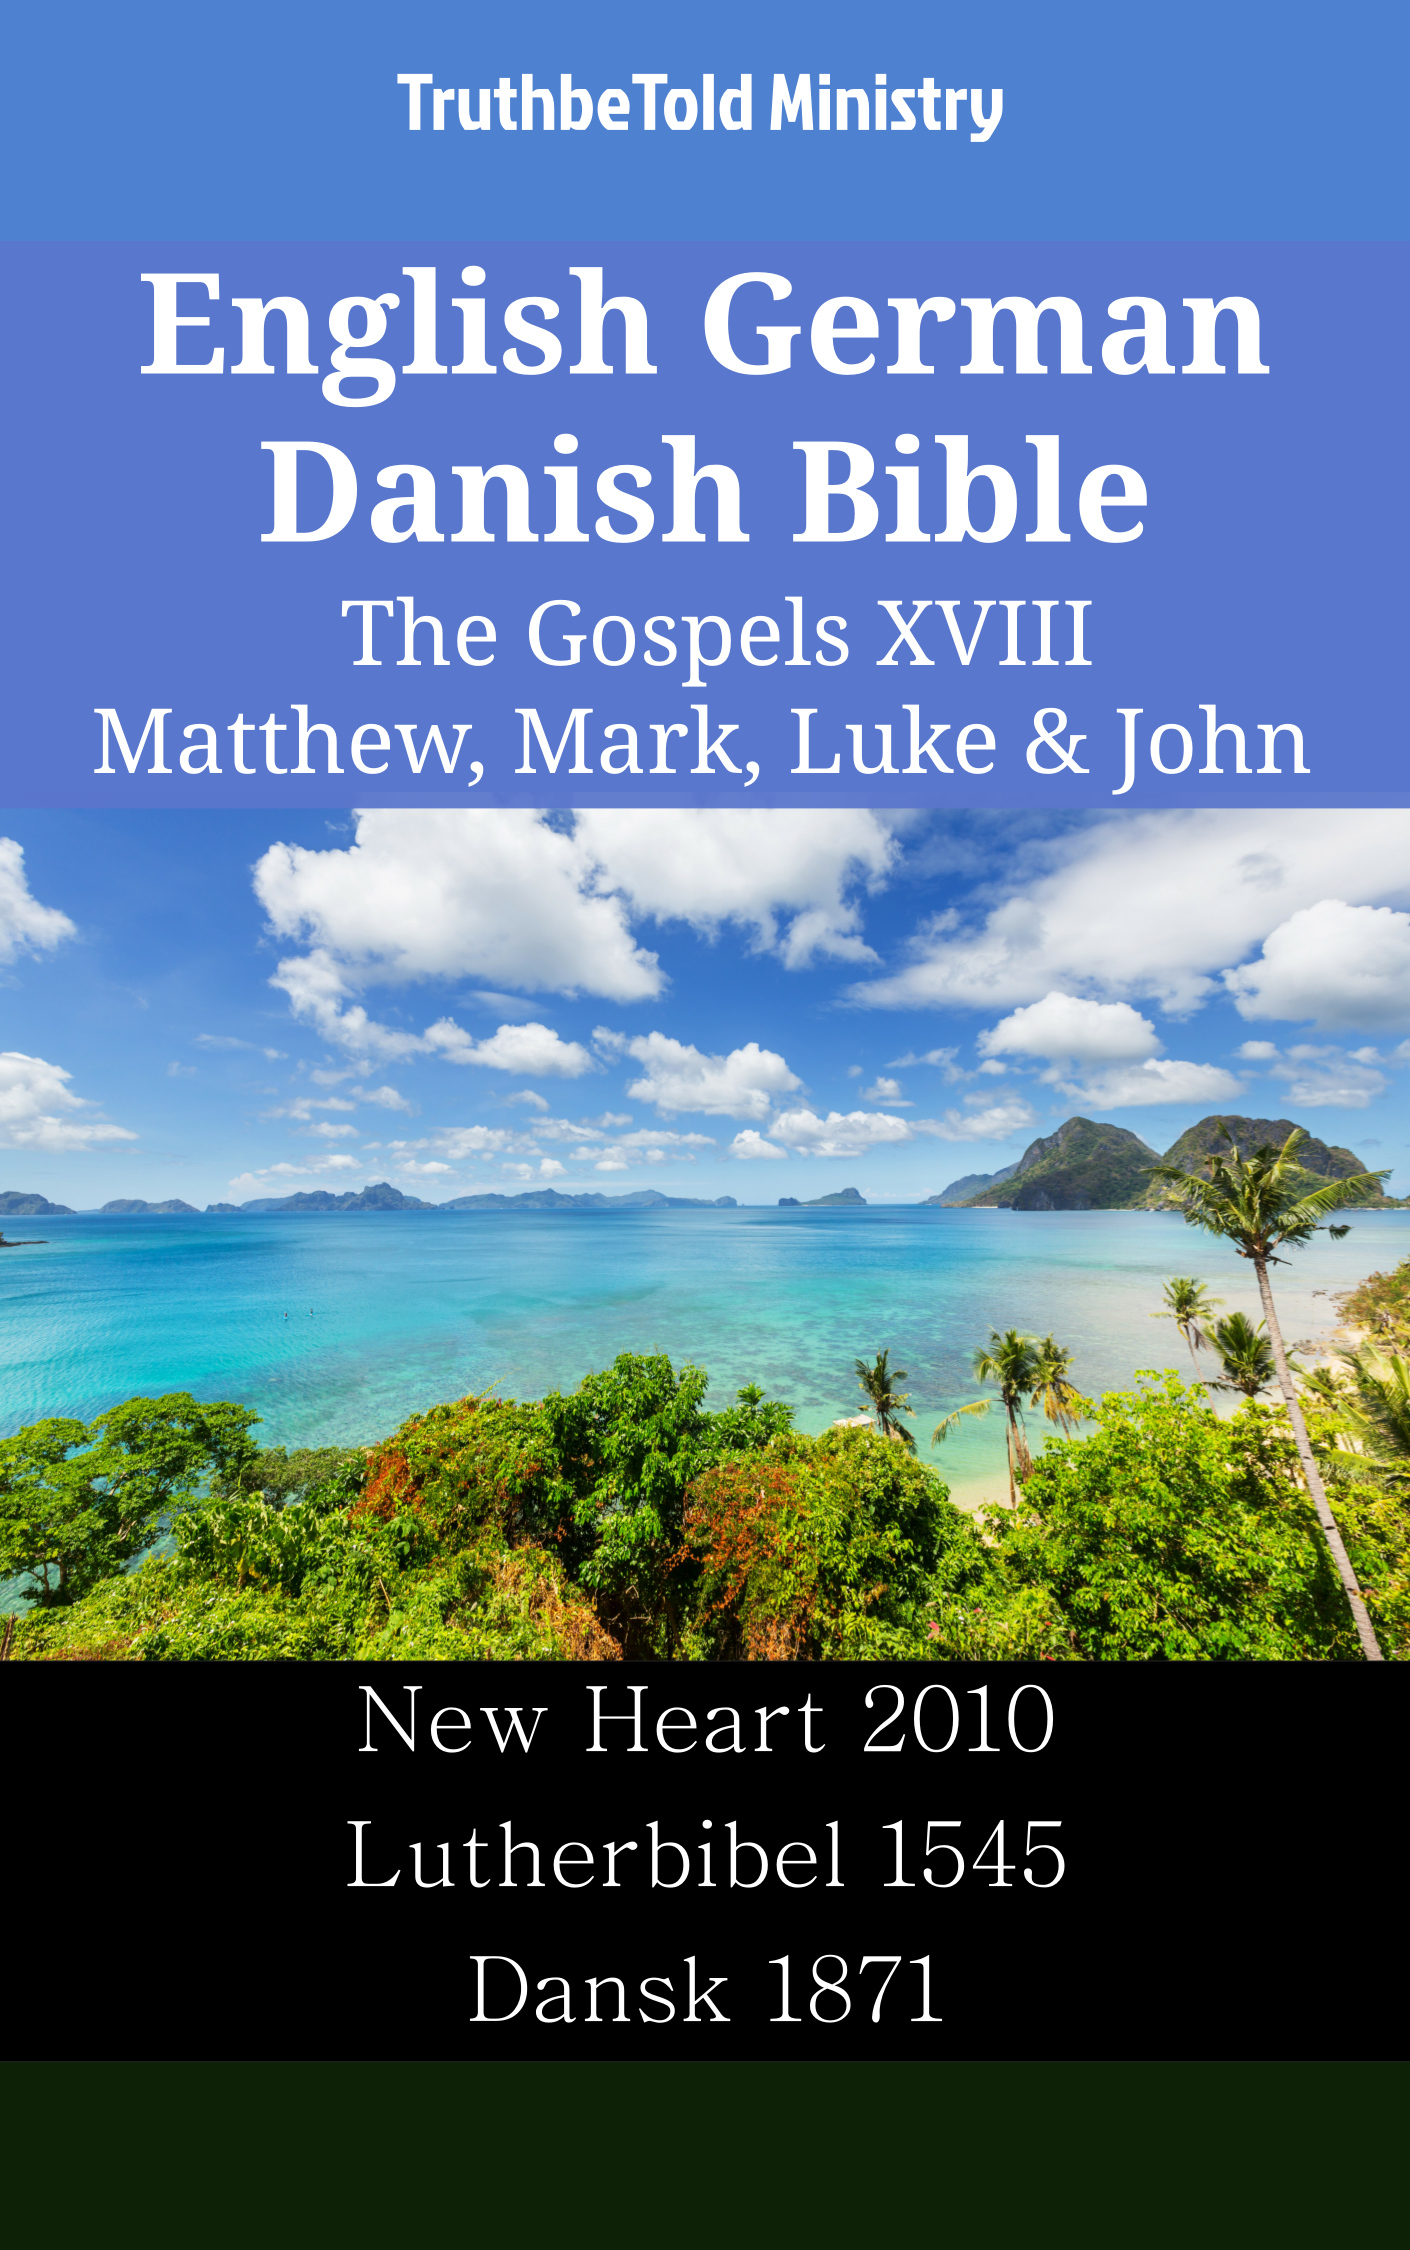 English German Danish Bible - The Gospels XVIII - Matthew, Mark, Luke & John